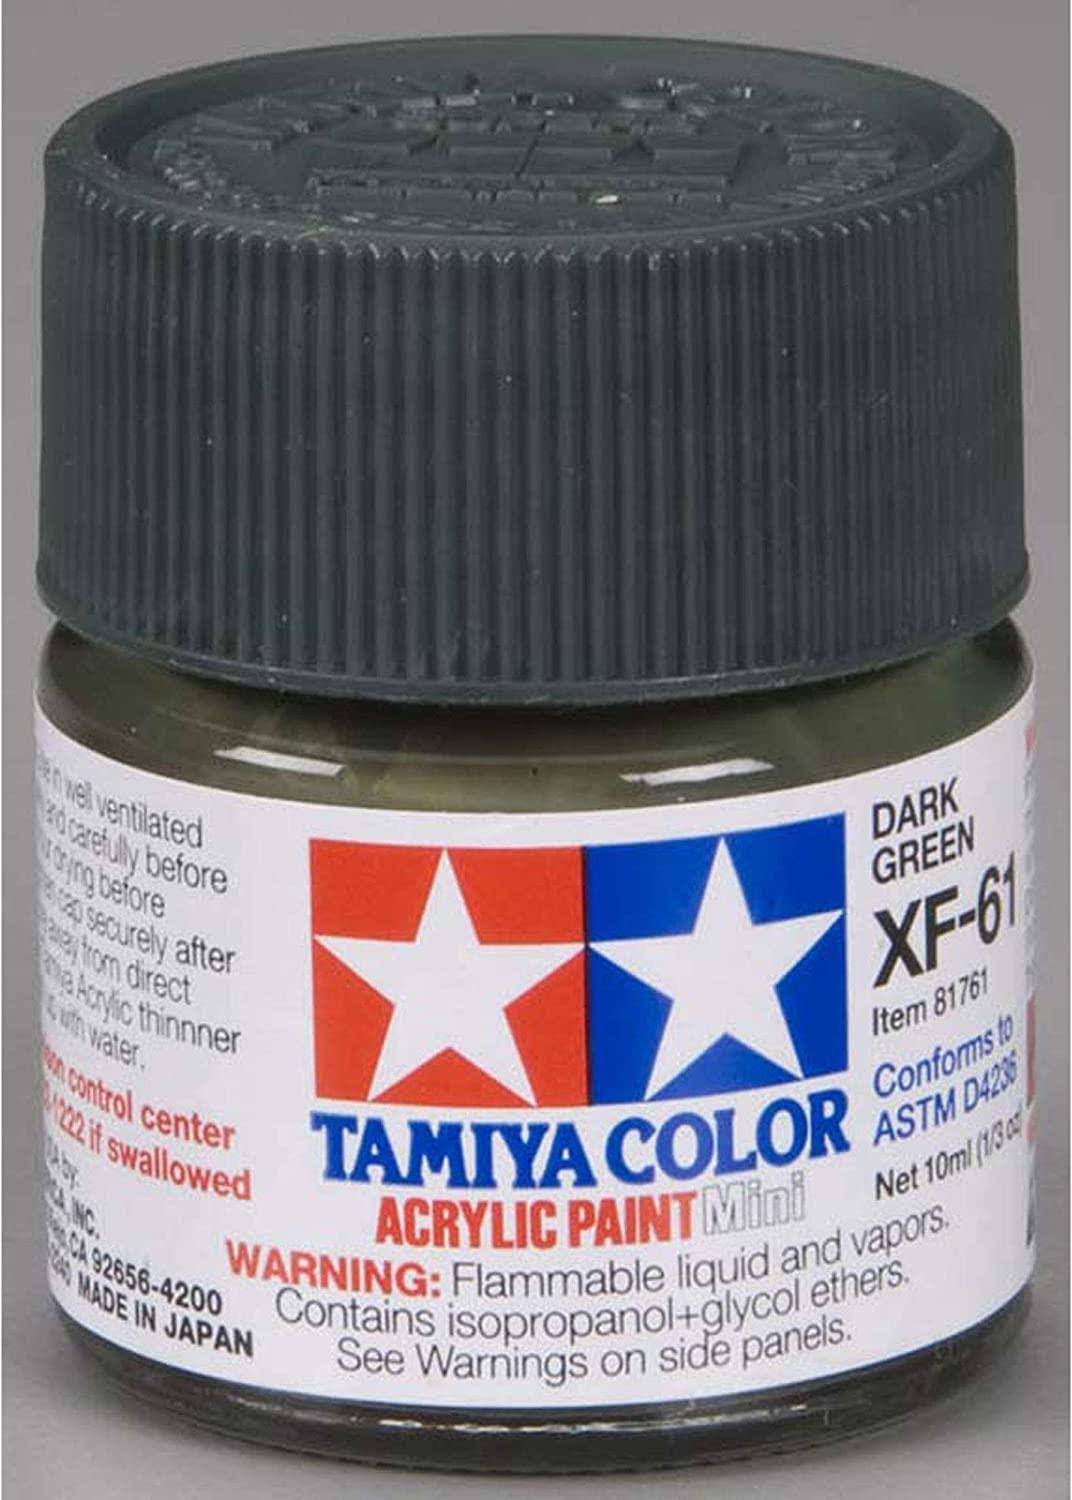 Tamiya Acrylic XF-61 Dark Green 10ml